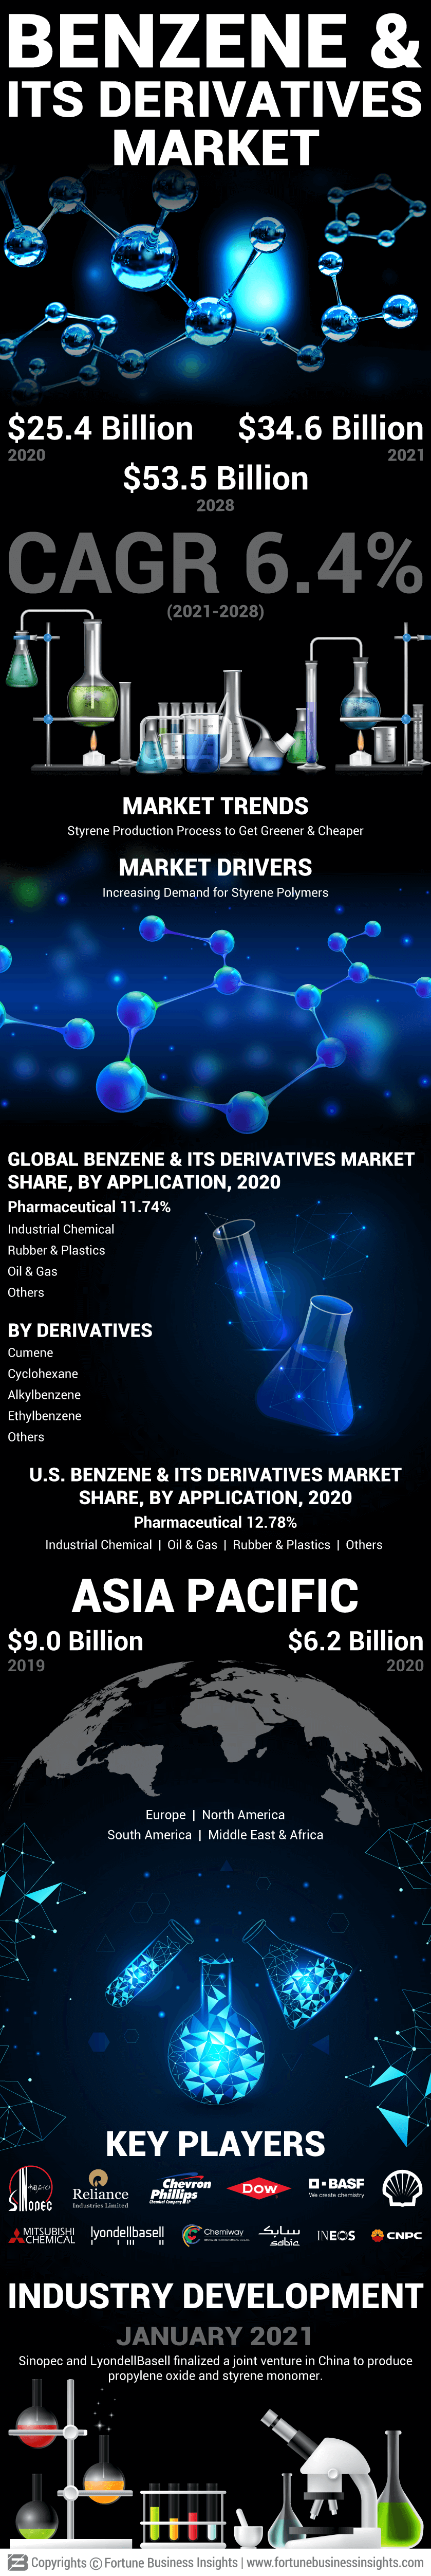 Benzene Market